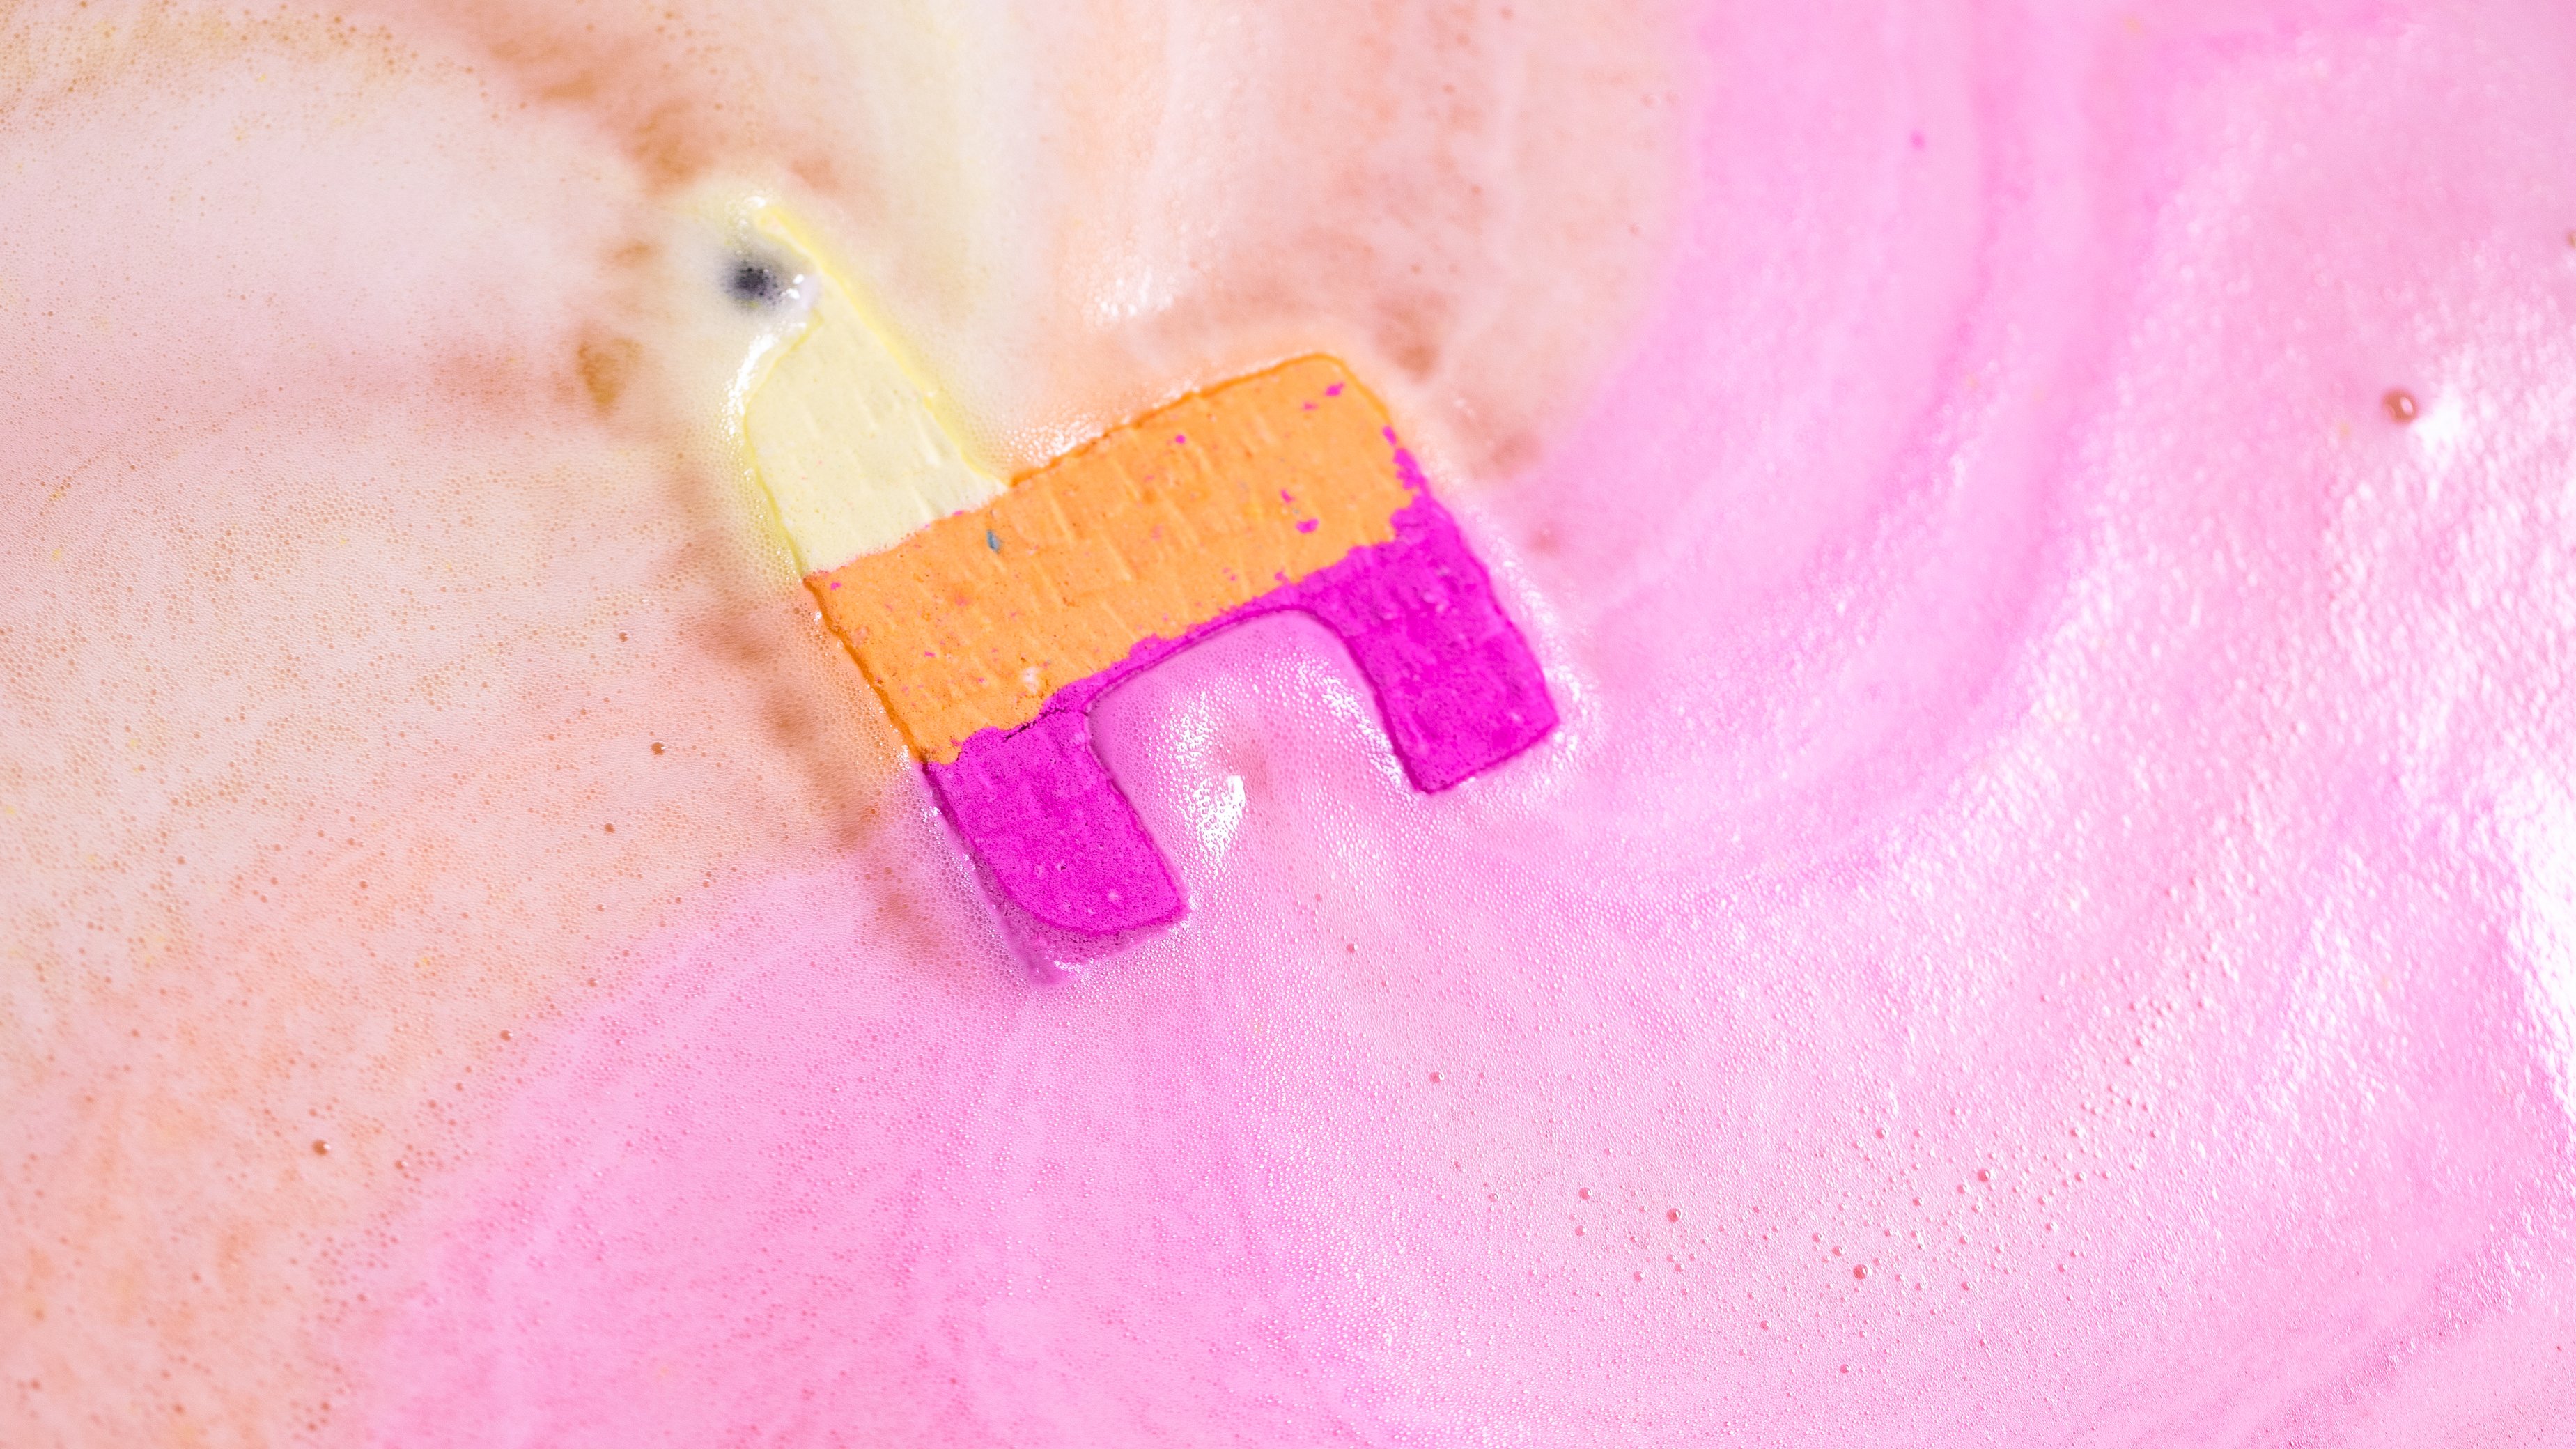 The fun, colourful, Piñata-shaped Calm A Llama bath bomb sits in the bath within foaming swirls of orange and pink.